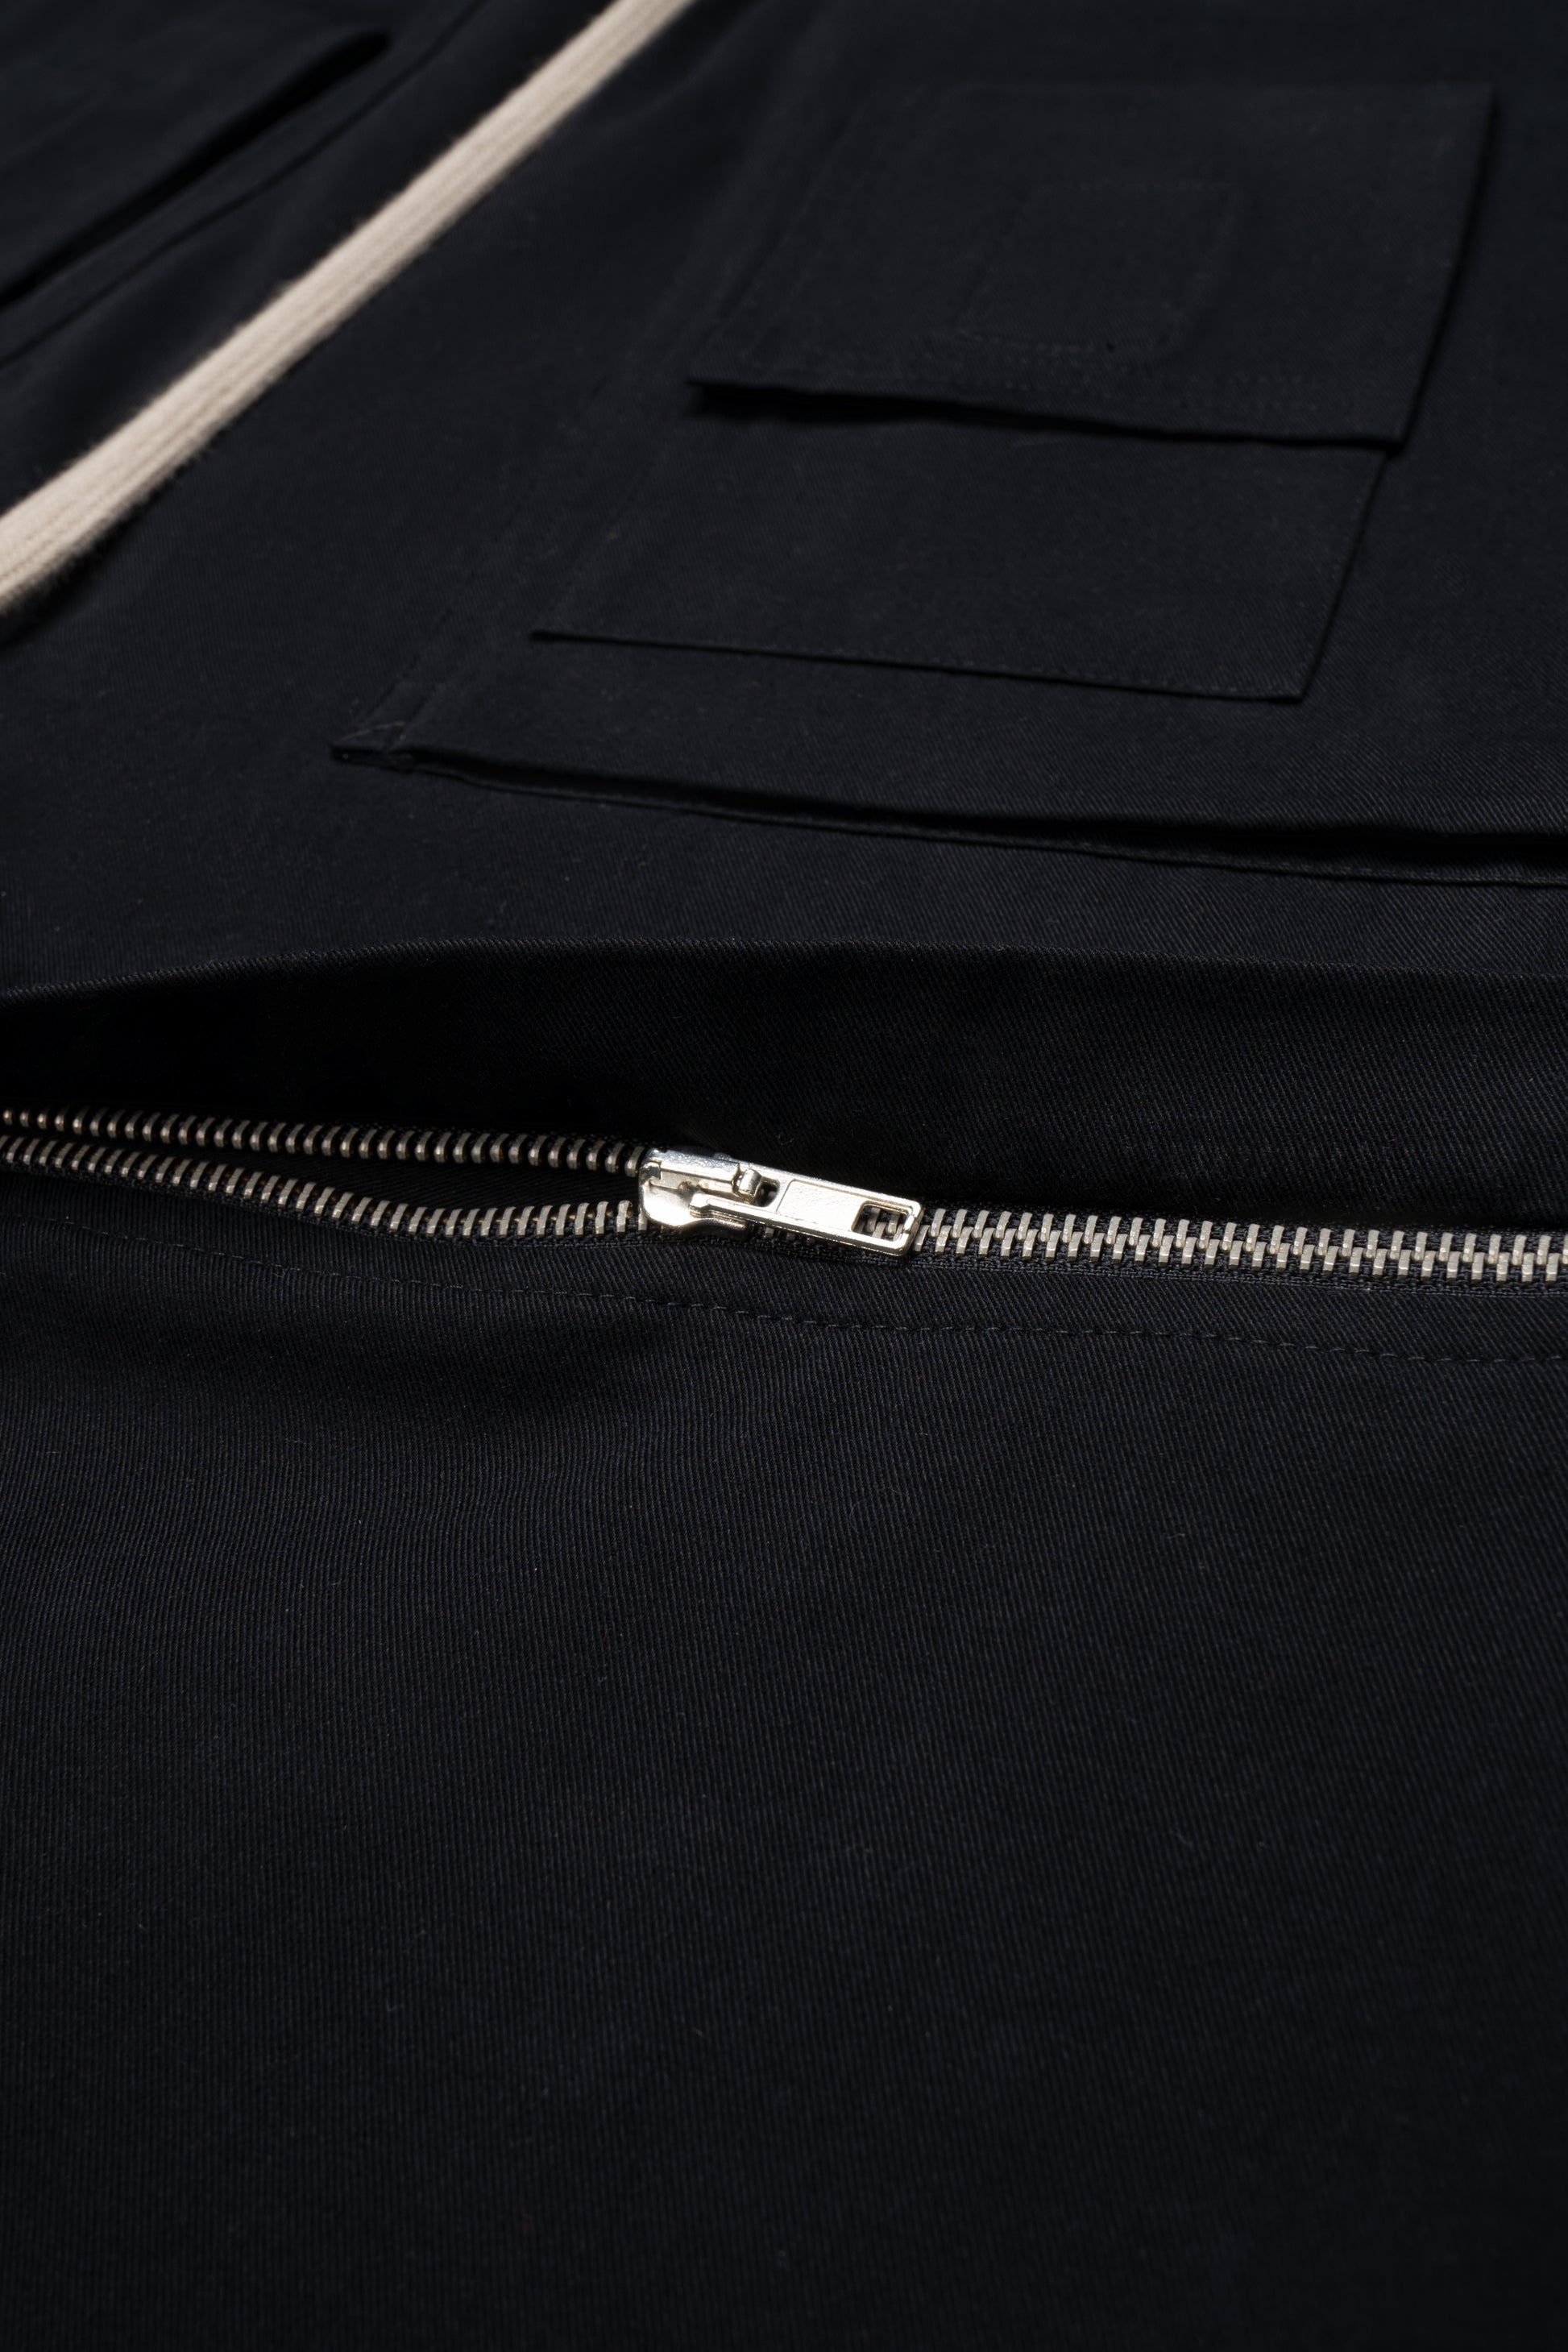 Zipper detail of black convertible pants